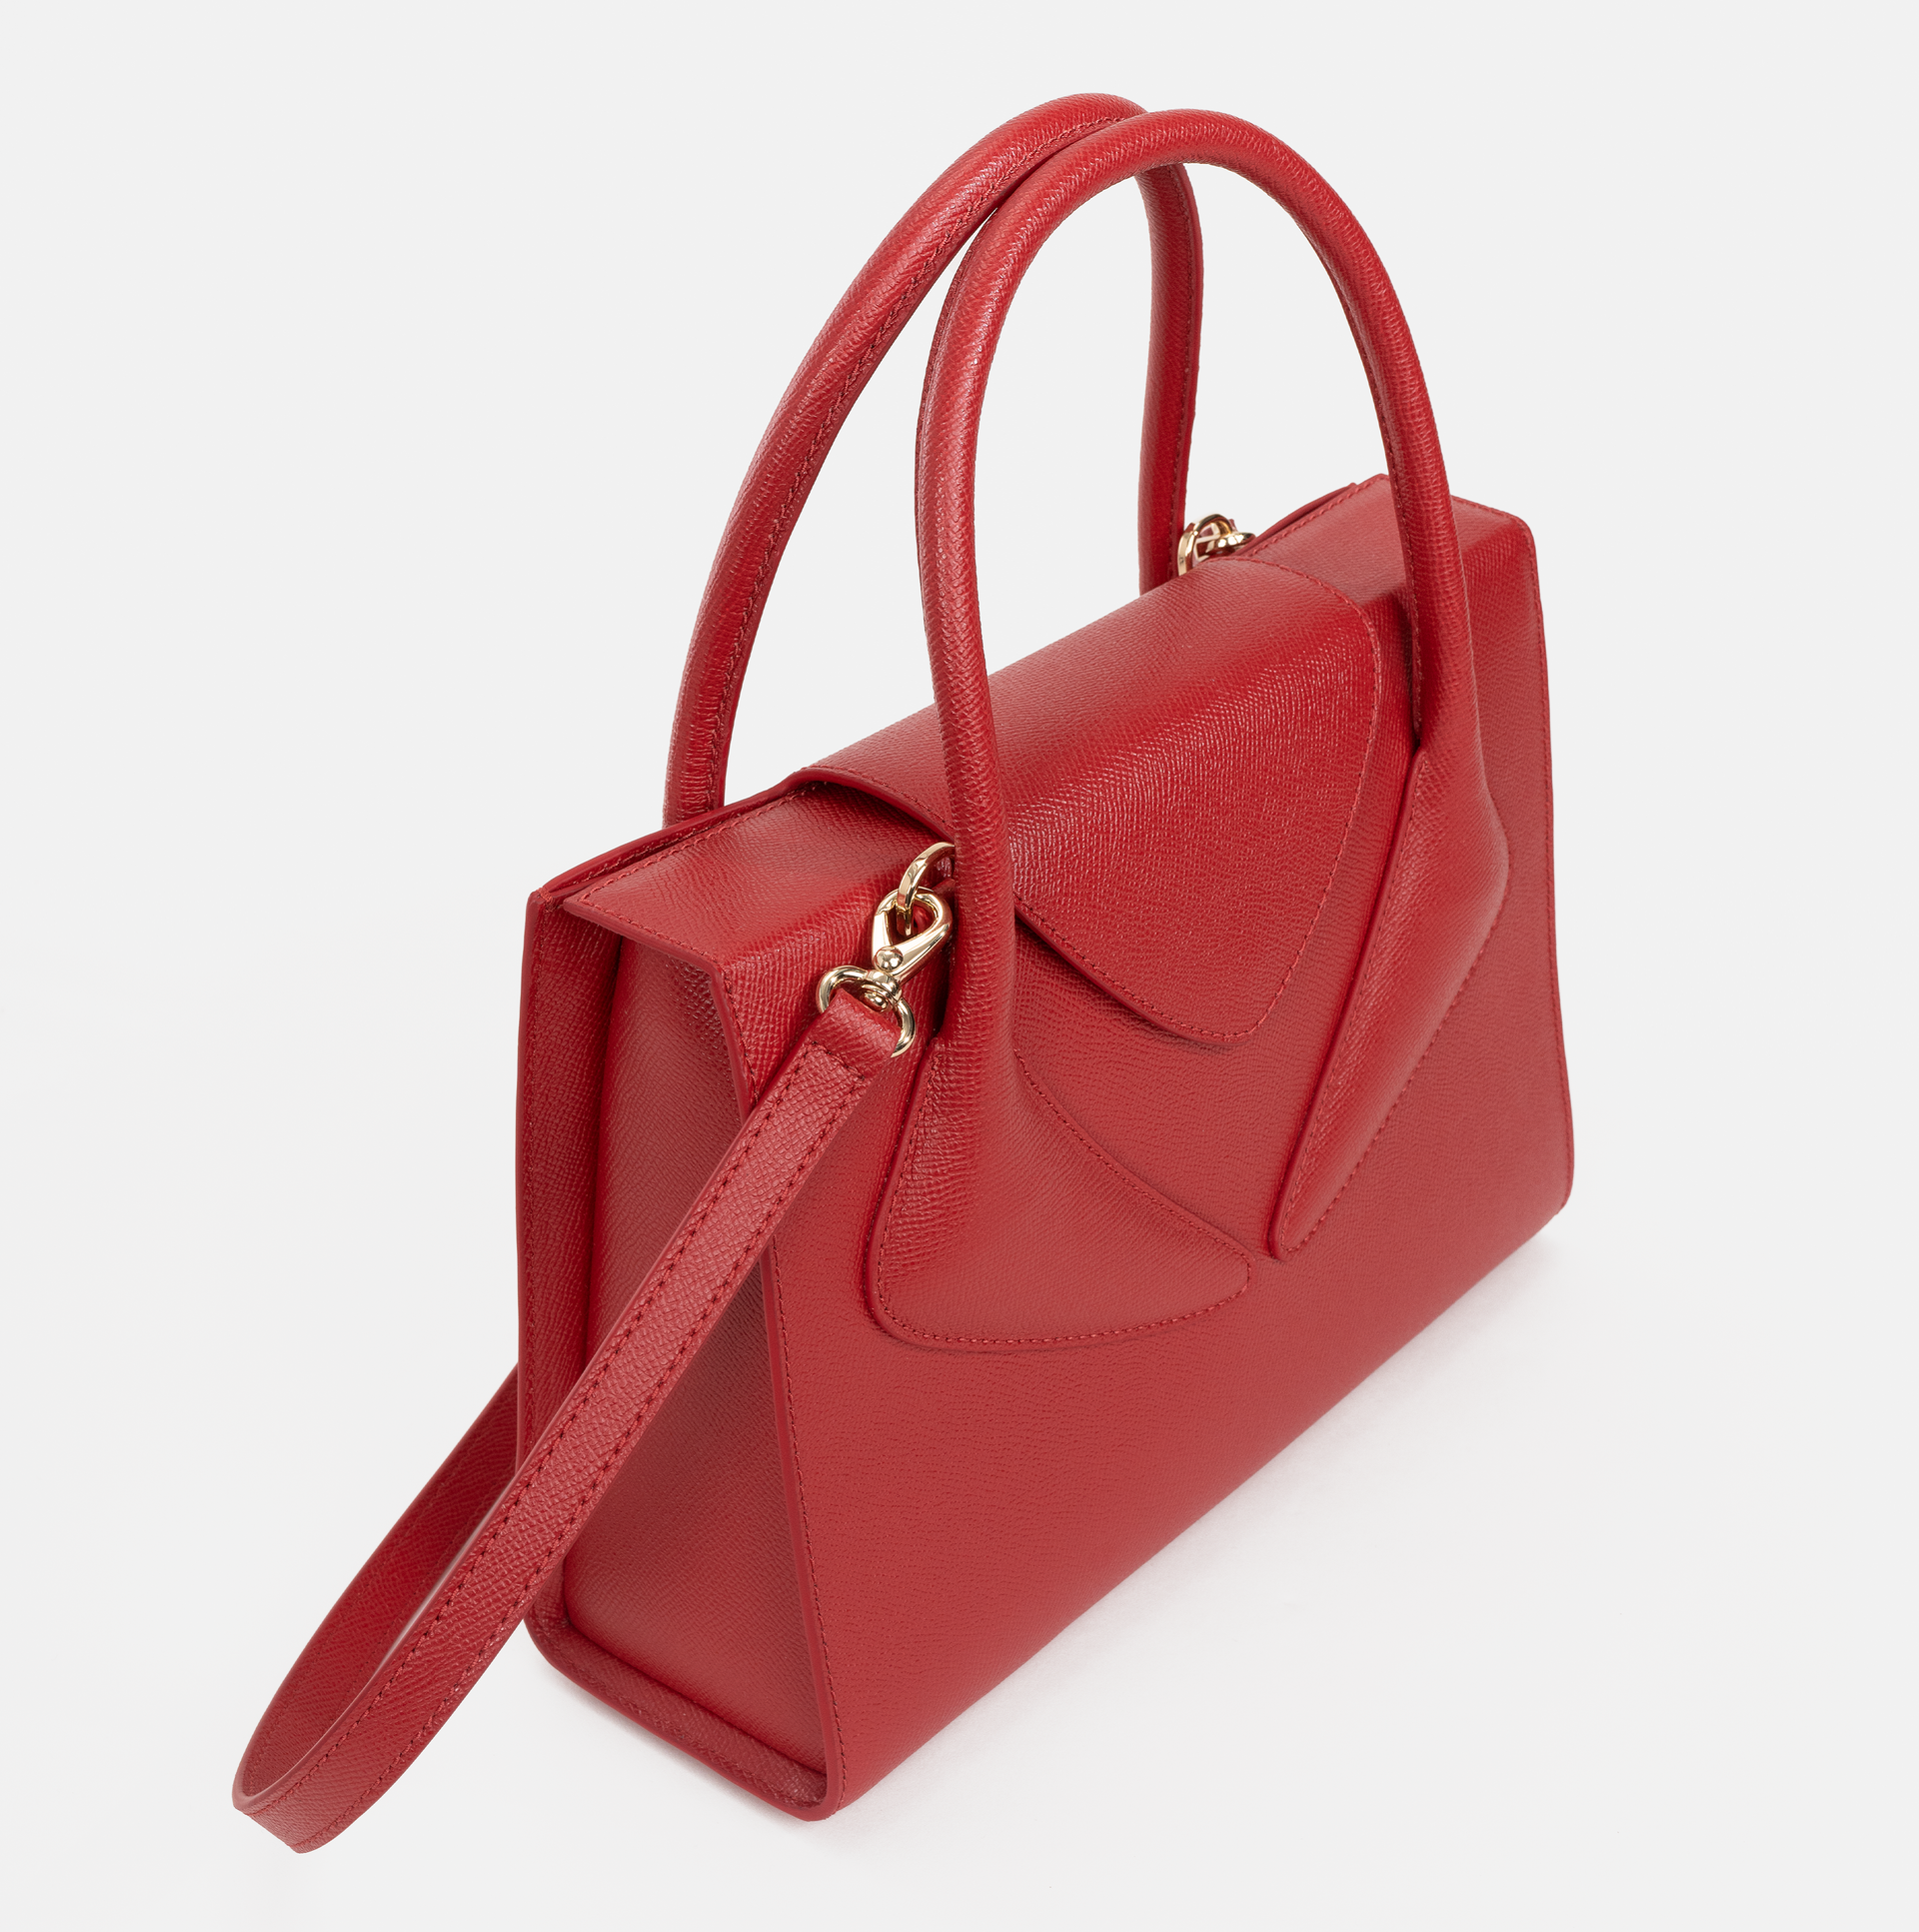 Madelon cross grain embossed leather shoulder bag in red